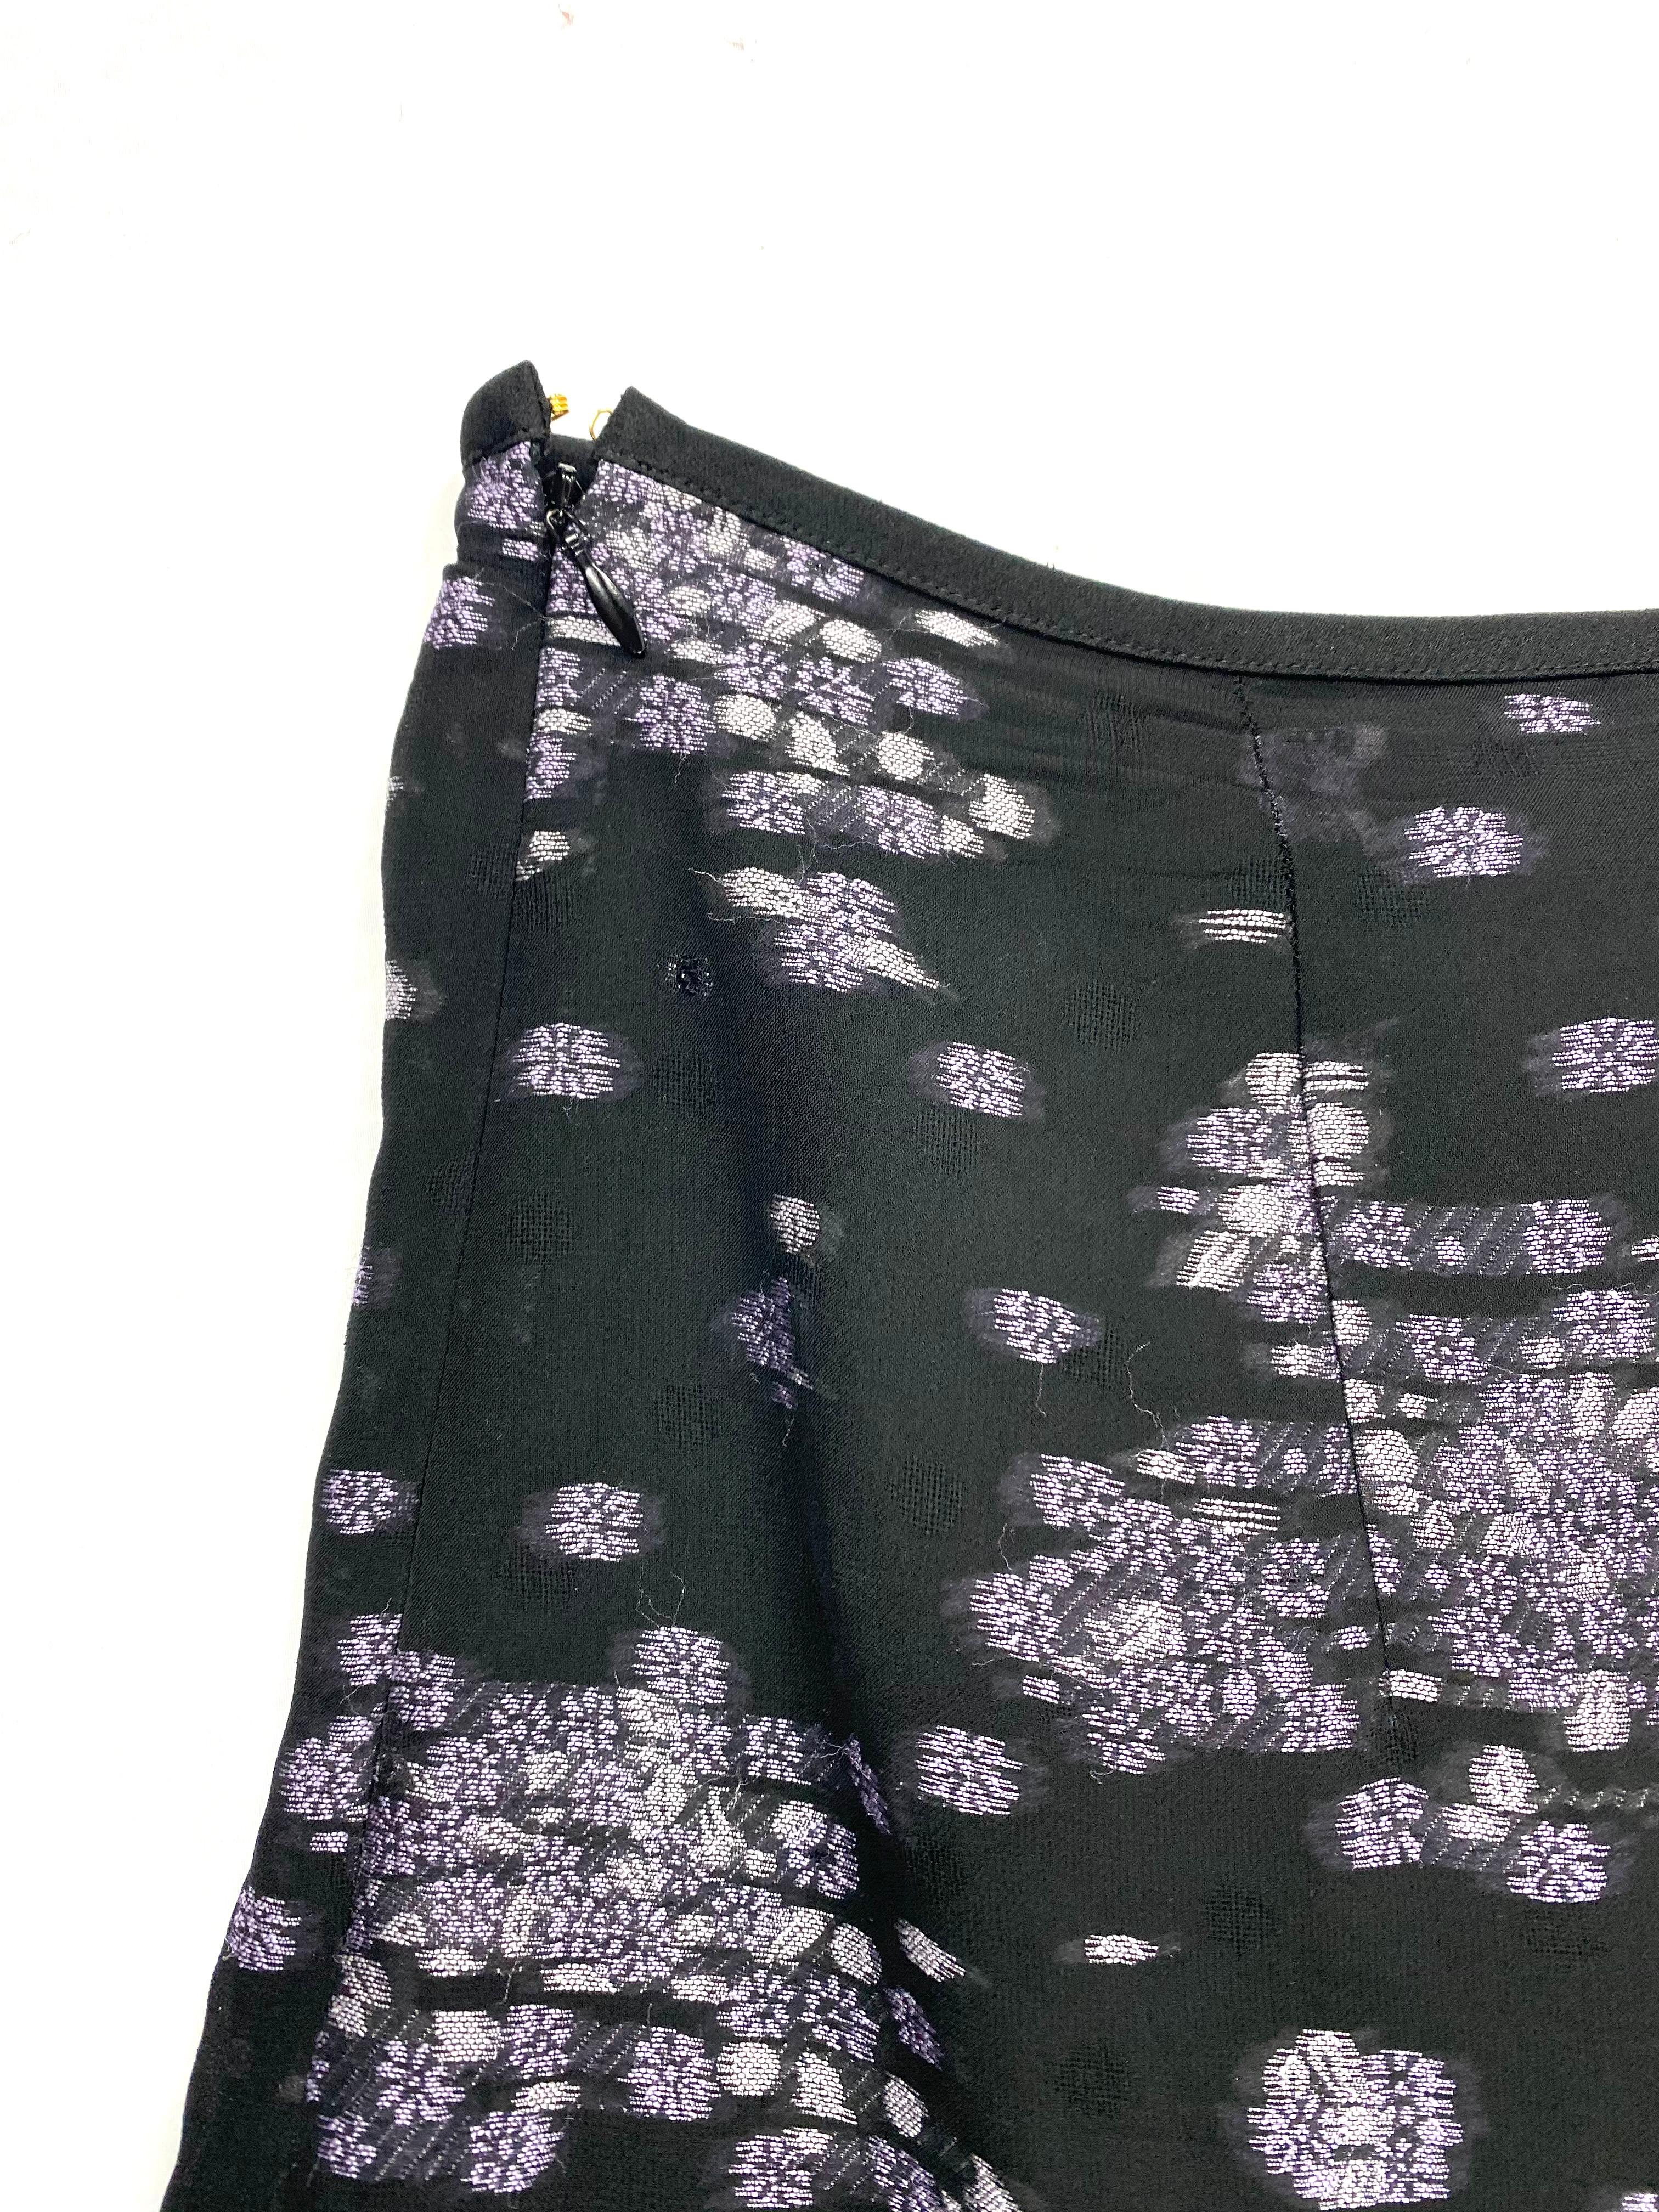 Vintage Black and Purple Floral Flare Pants, Size 2 For Sale 1